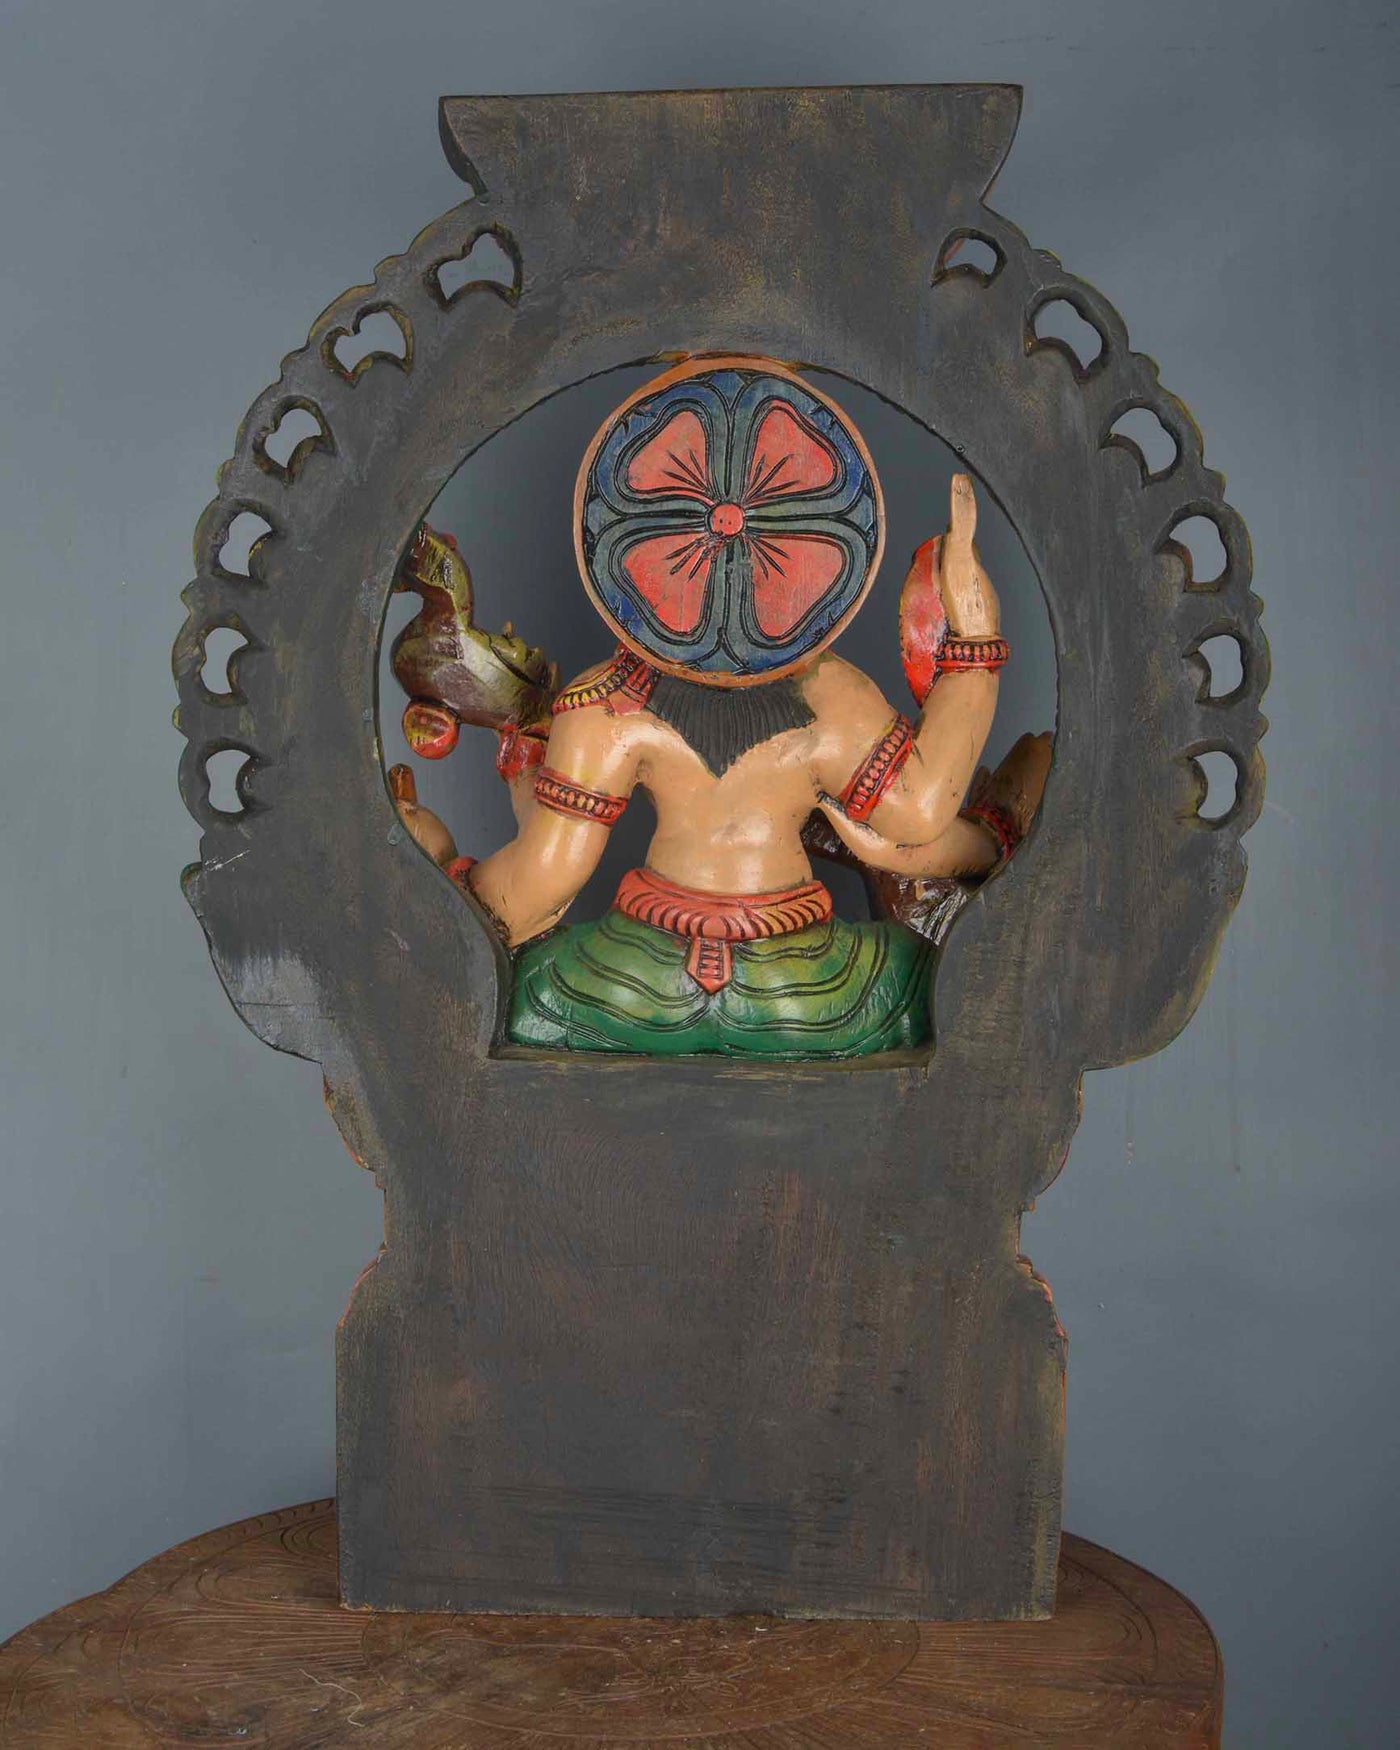 Goddess saraswathi Holding veena and Rosary statue 30"